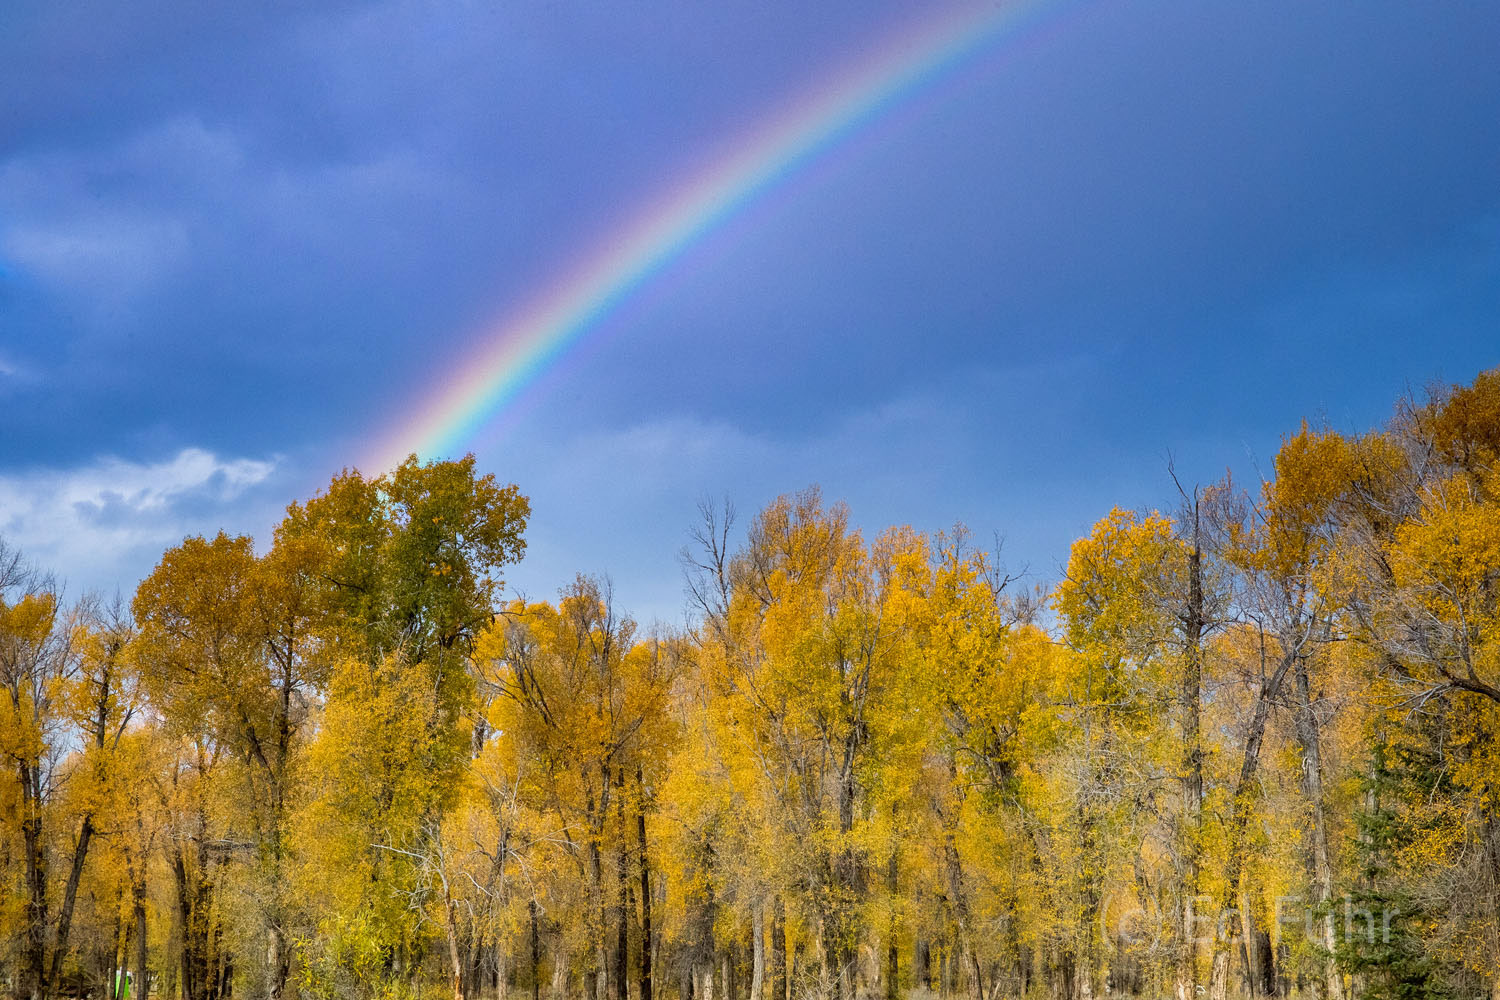 A rainbow emerges after a brief autumn rain.